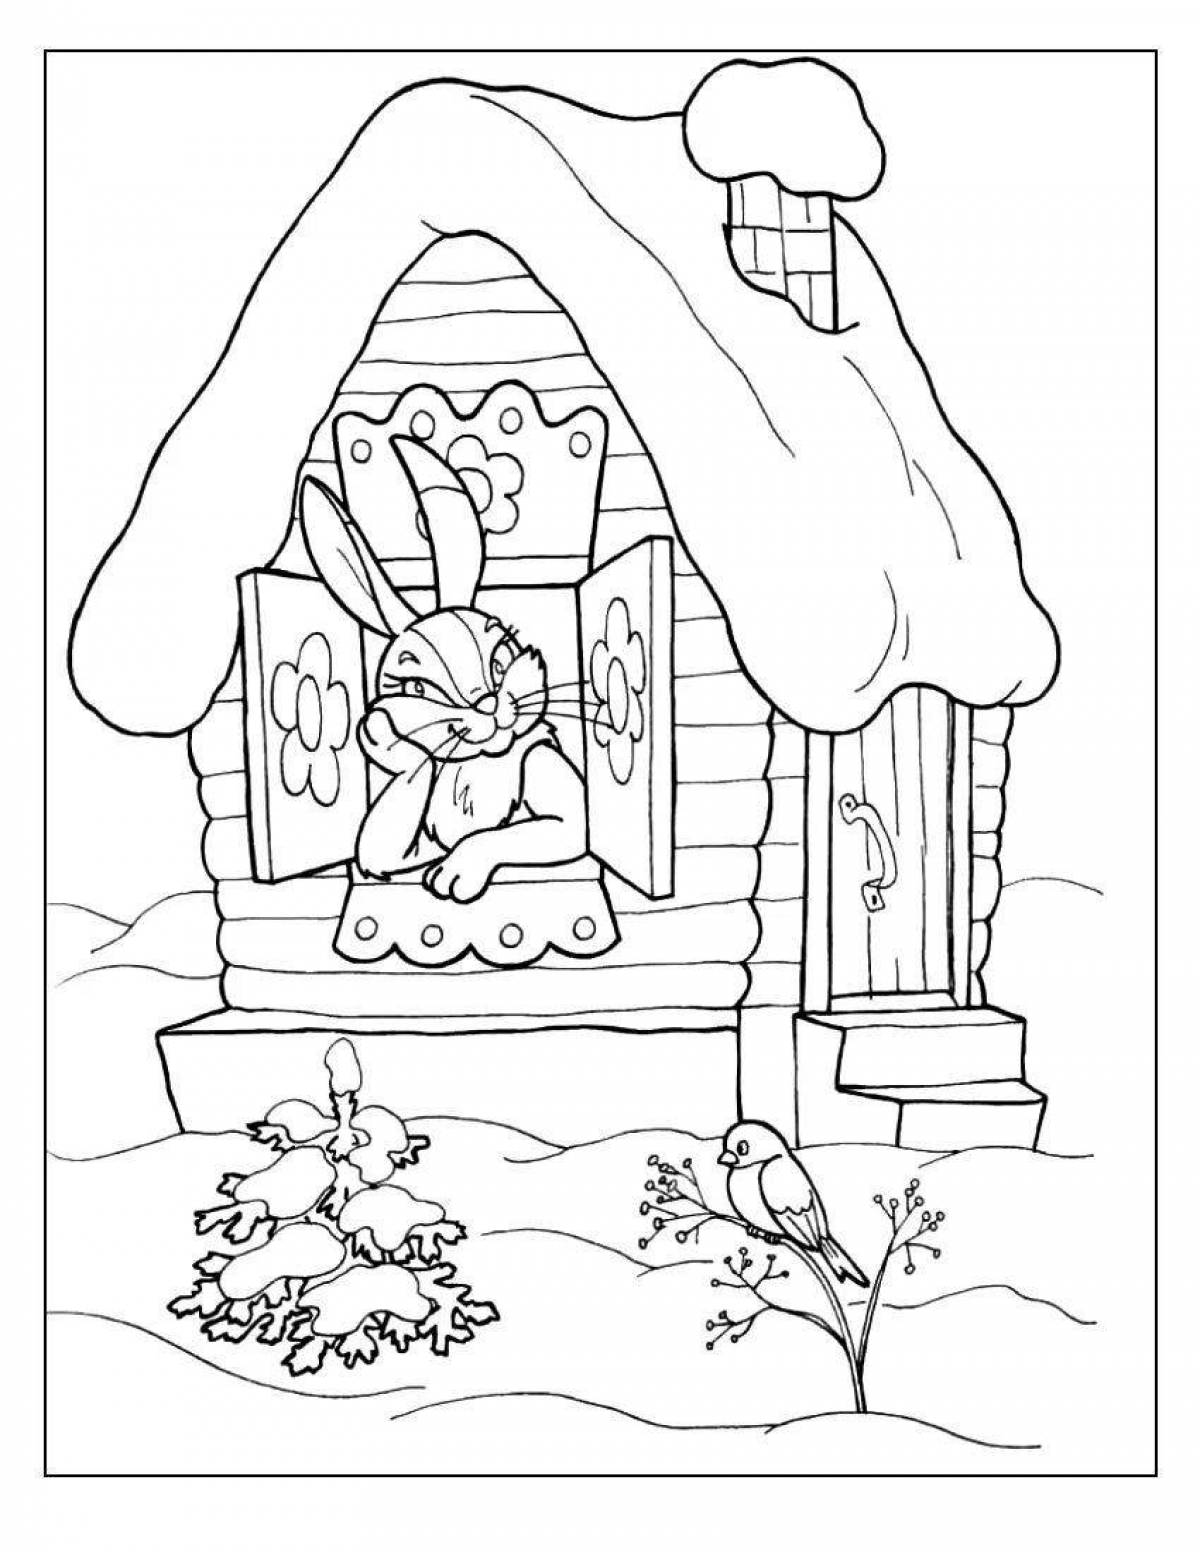 Coloring quaint hare's hut